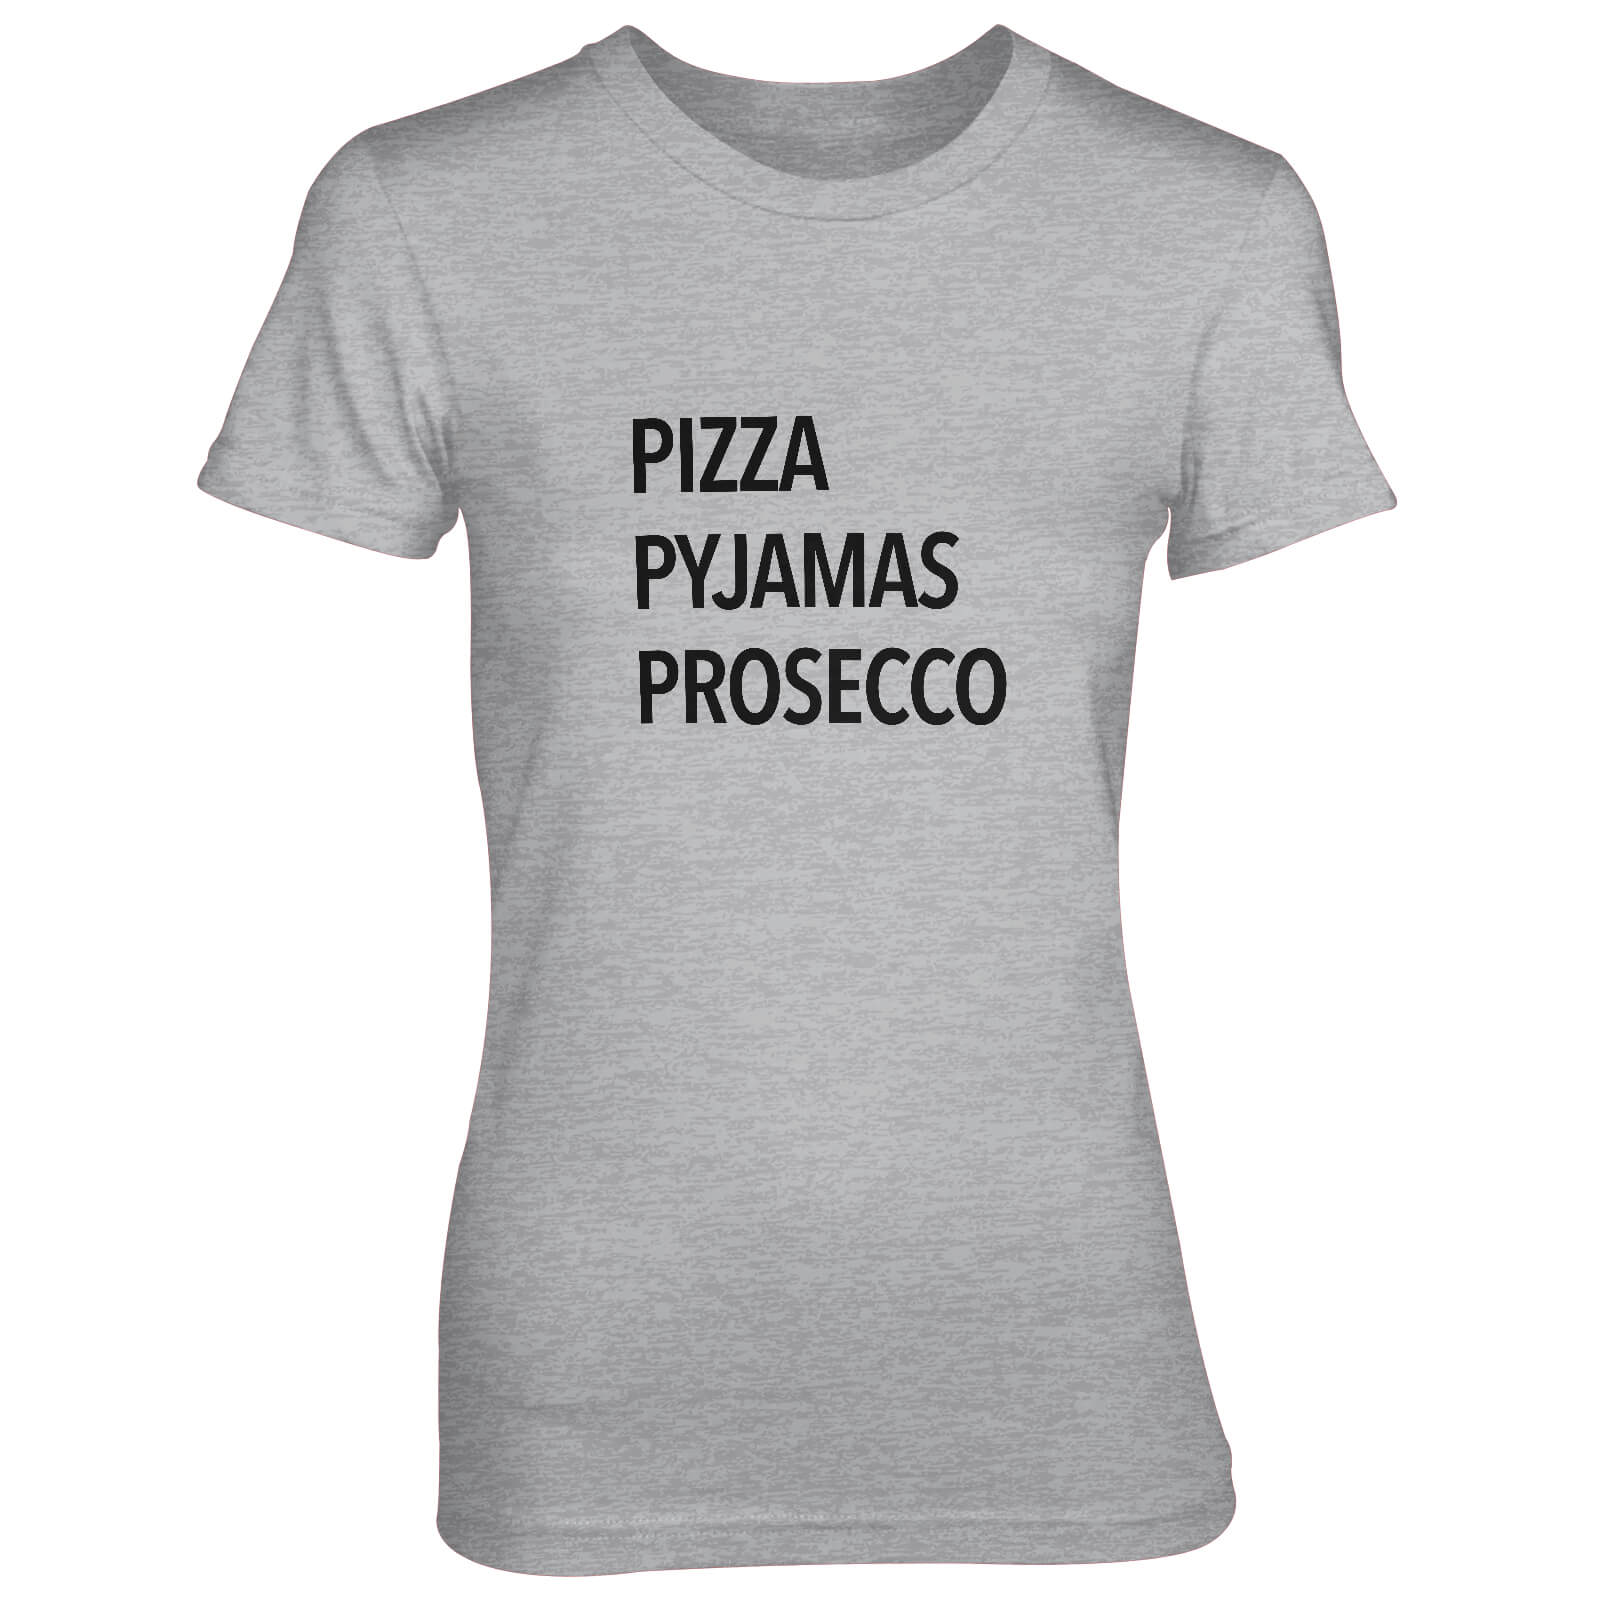 Pizza Pyjamas Prosecco Women's Grey T-Shirt - S - Grey